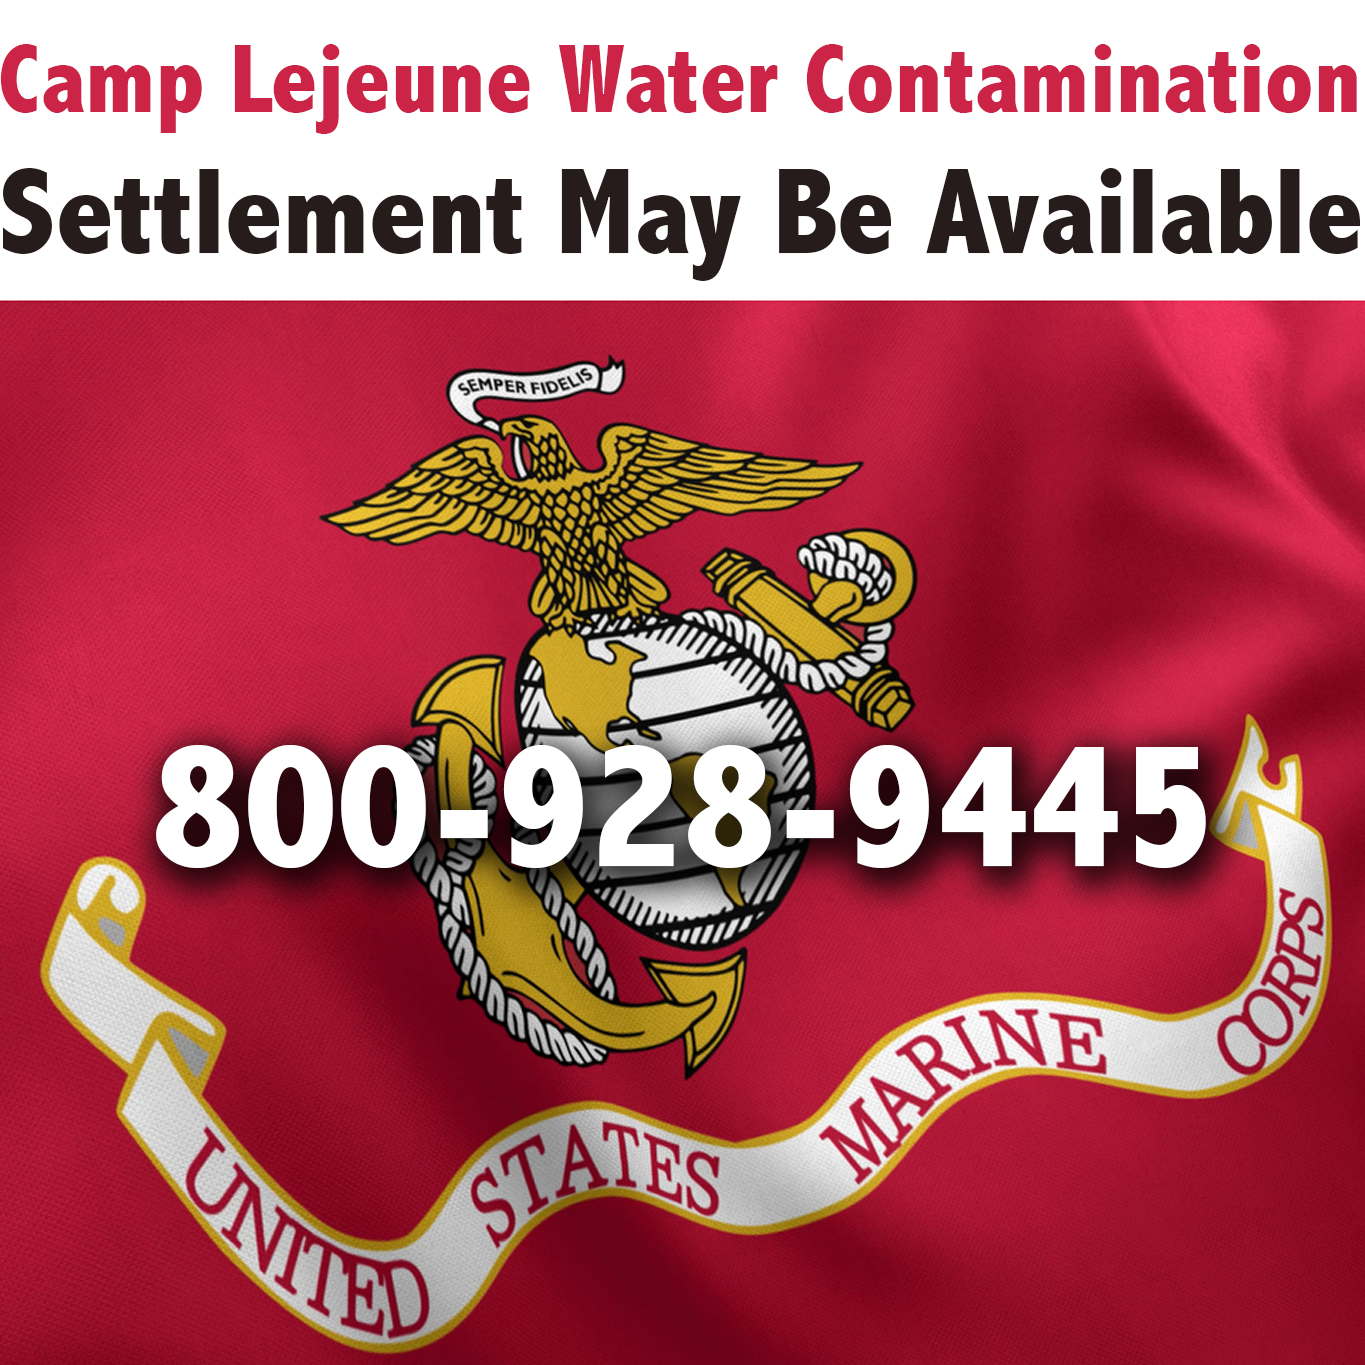 Camp Lejeune Water Contamination Settlement